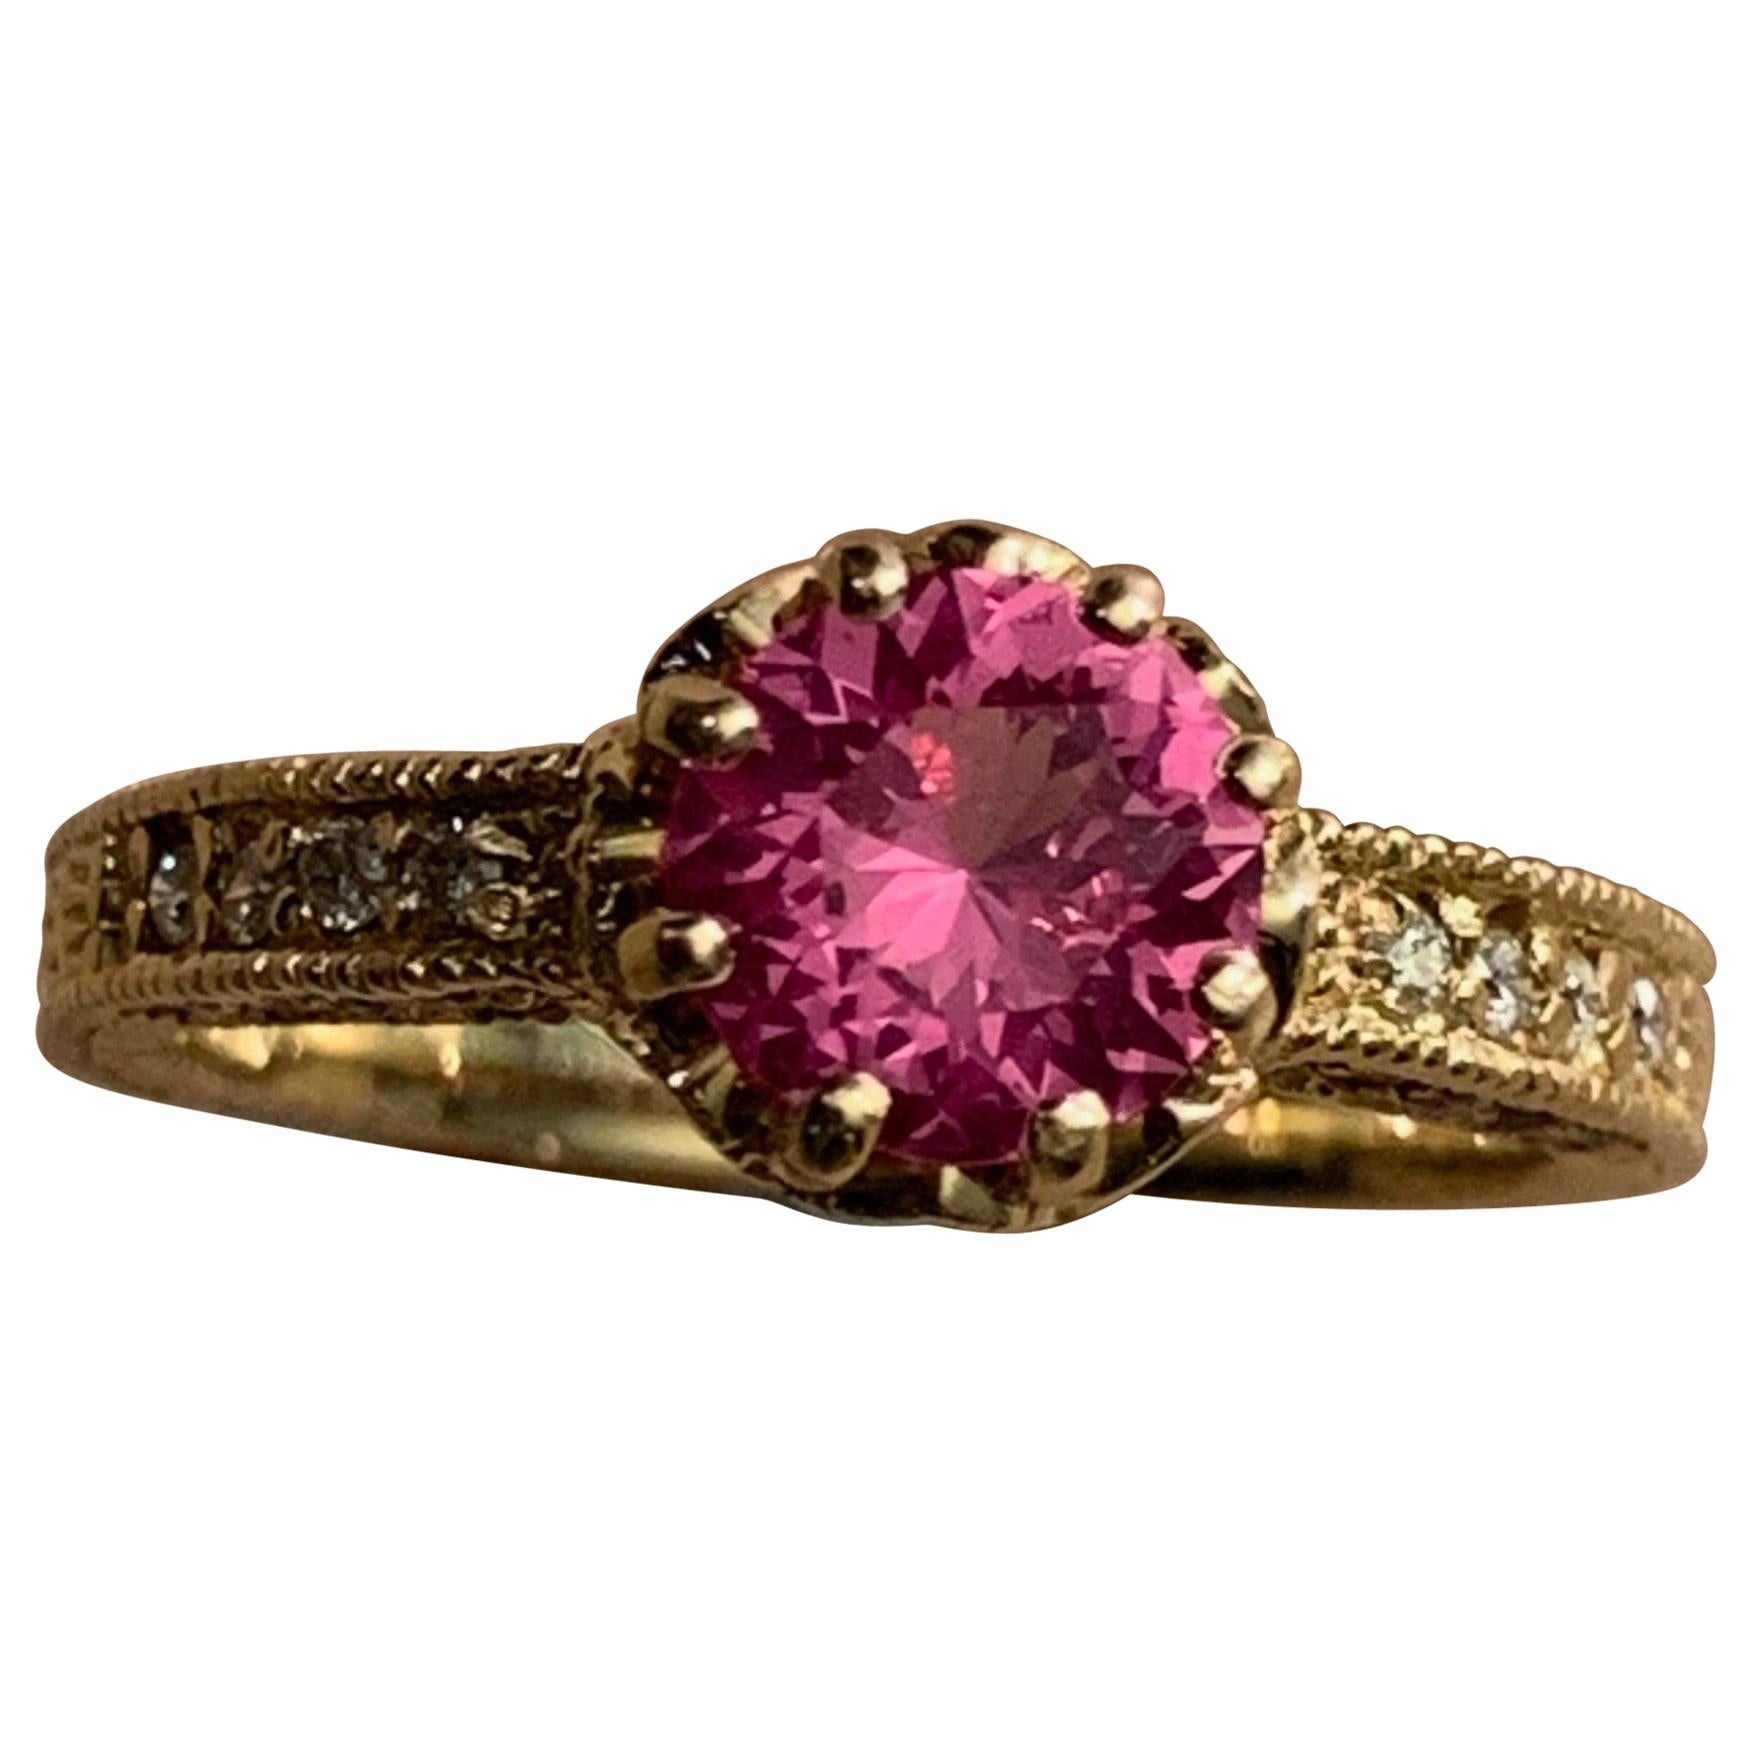 1.16 Carat Pink Spinel Ring with Diamonds in 14 Karat Gold